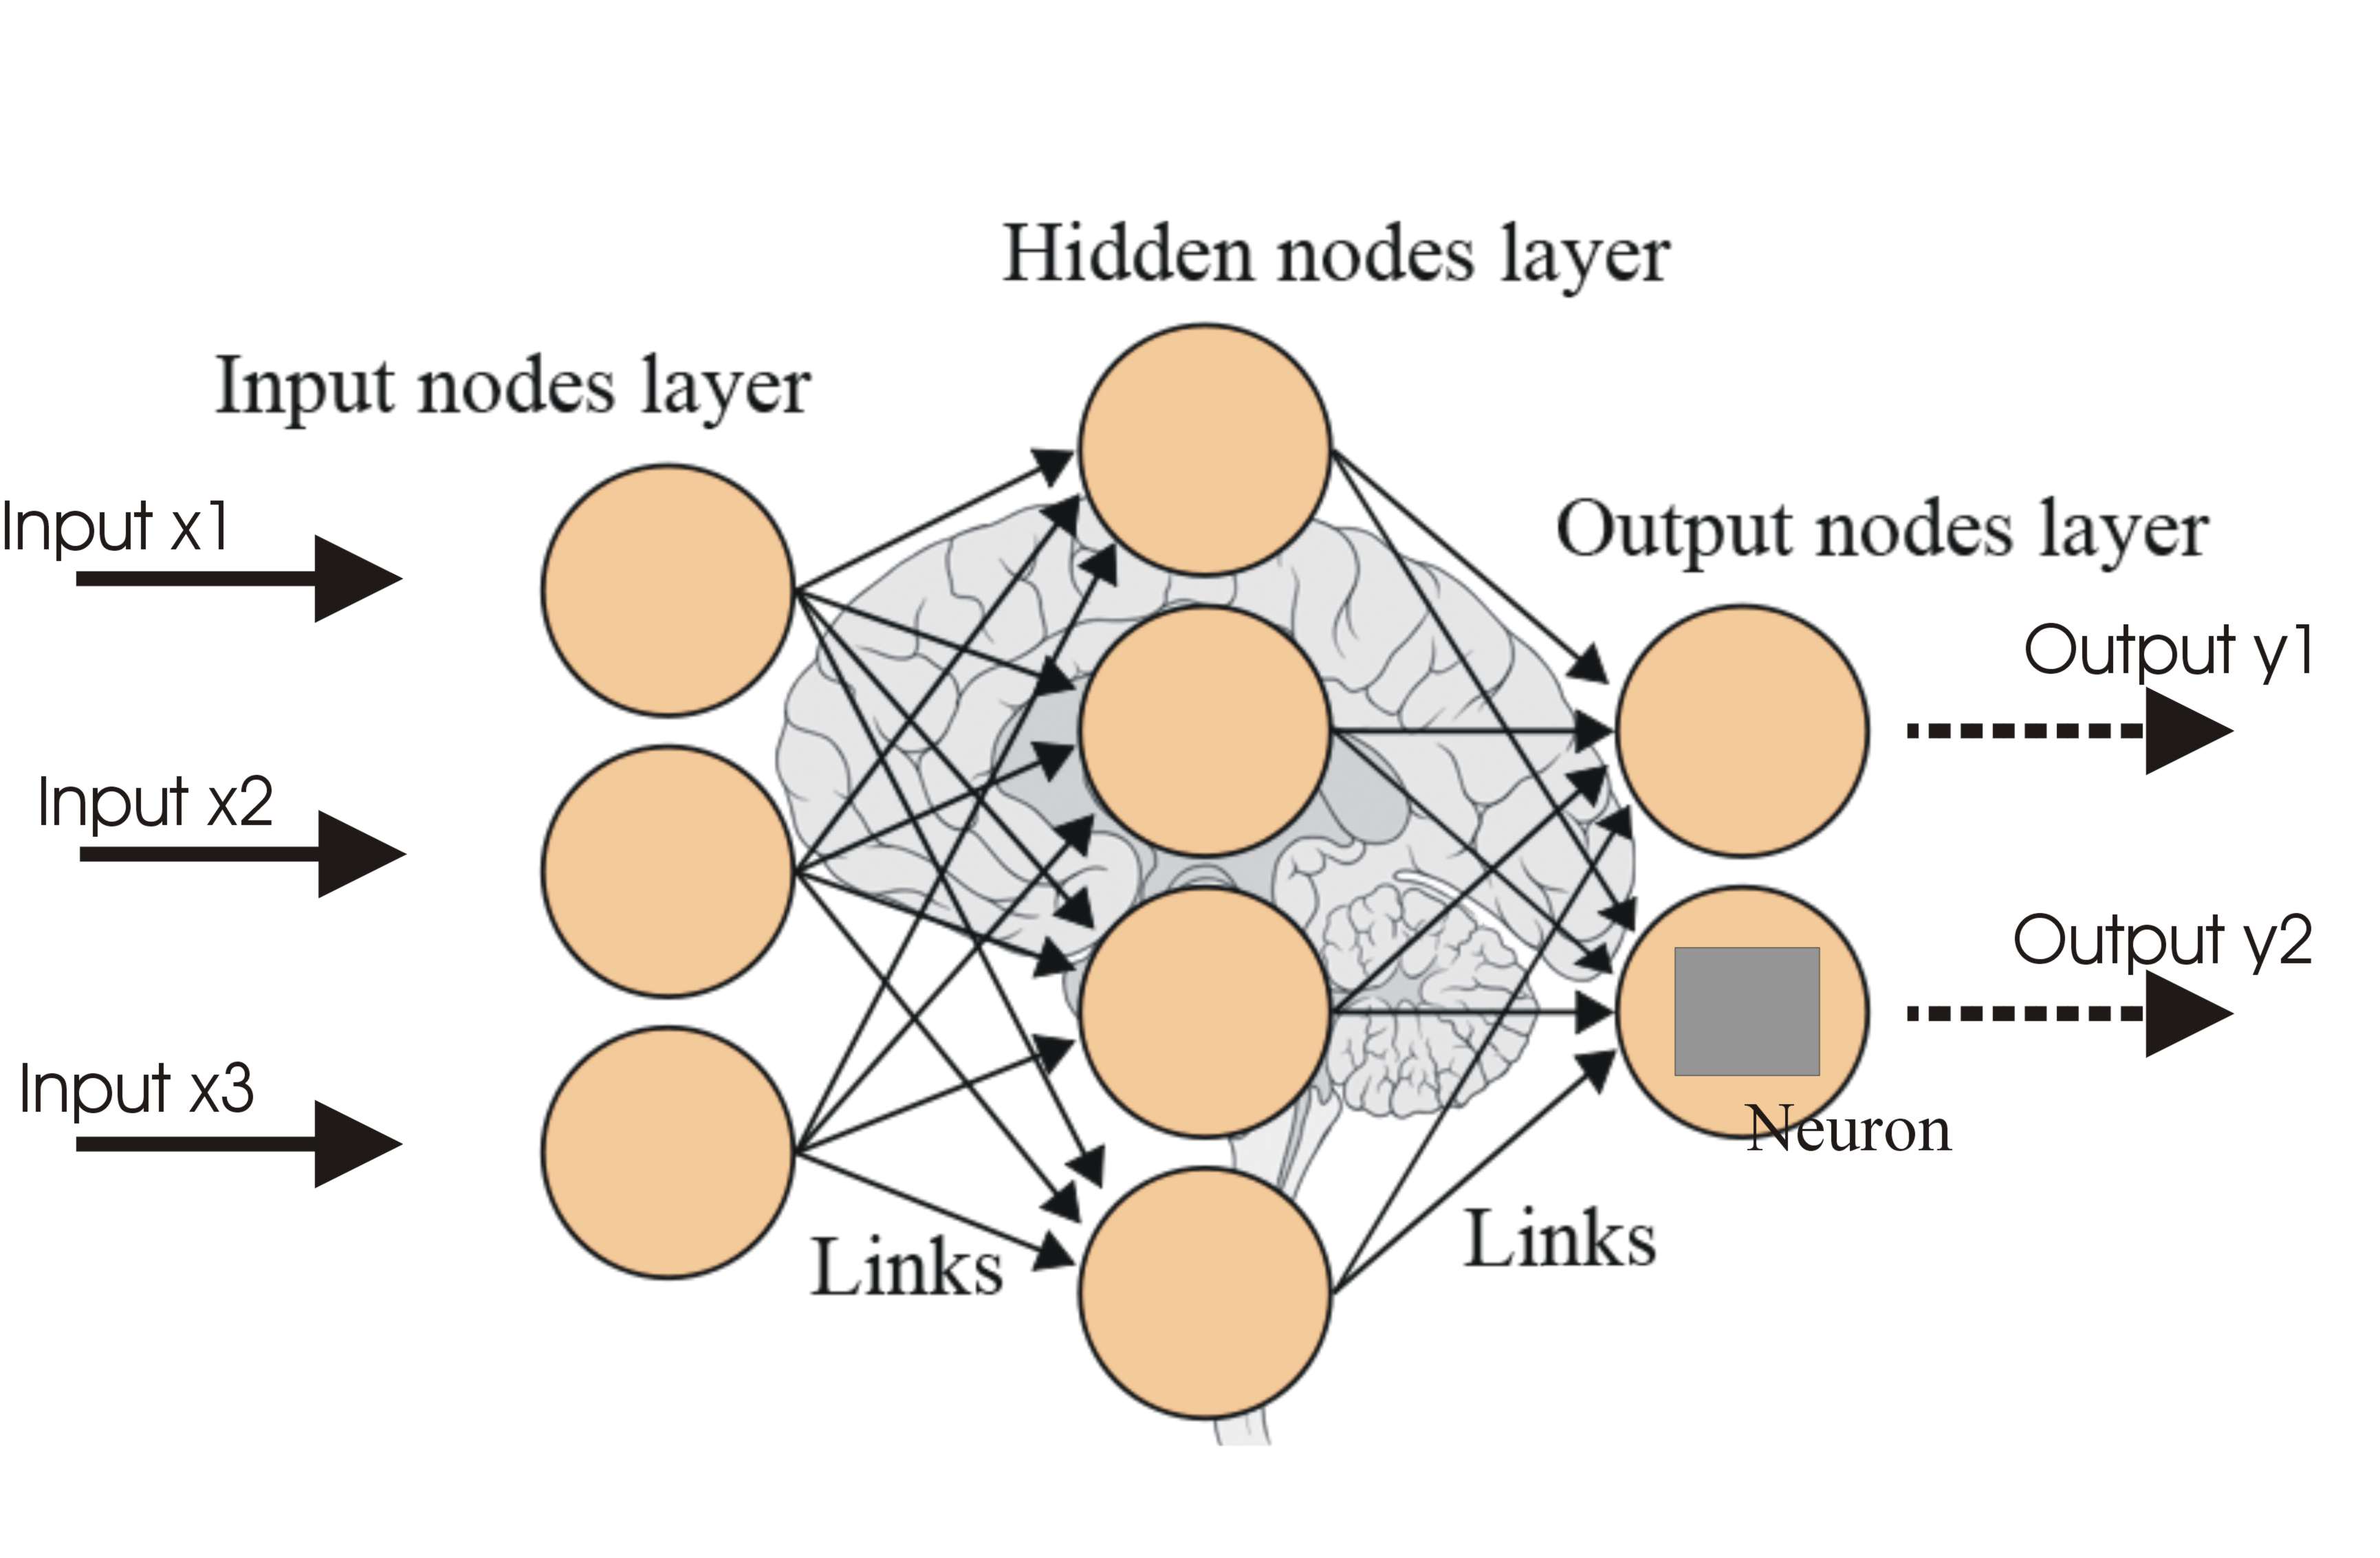 deep learning vs neural networks